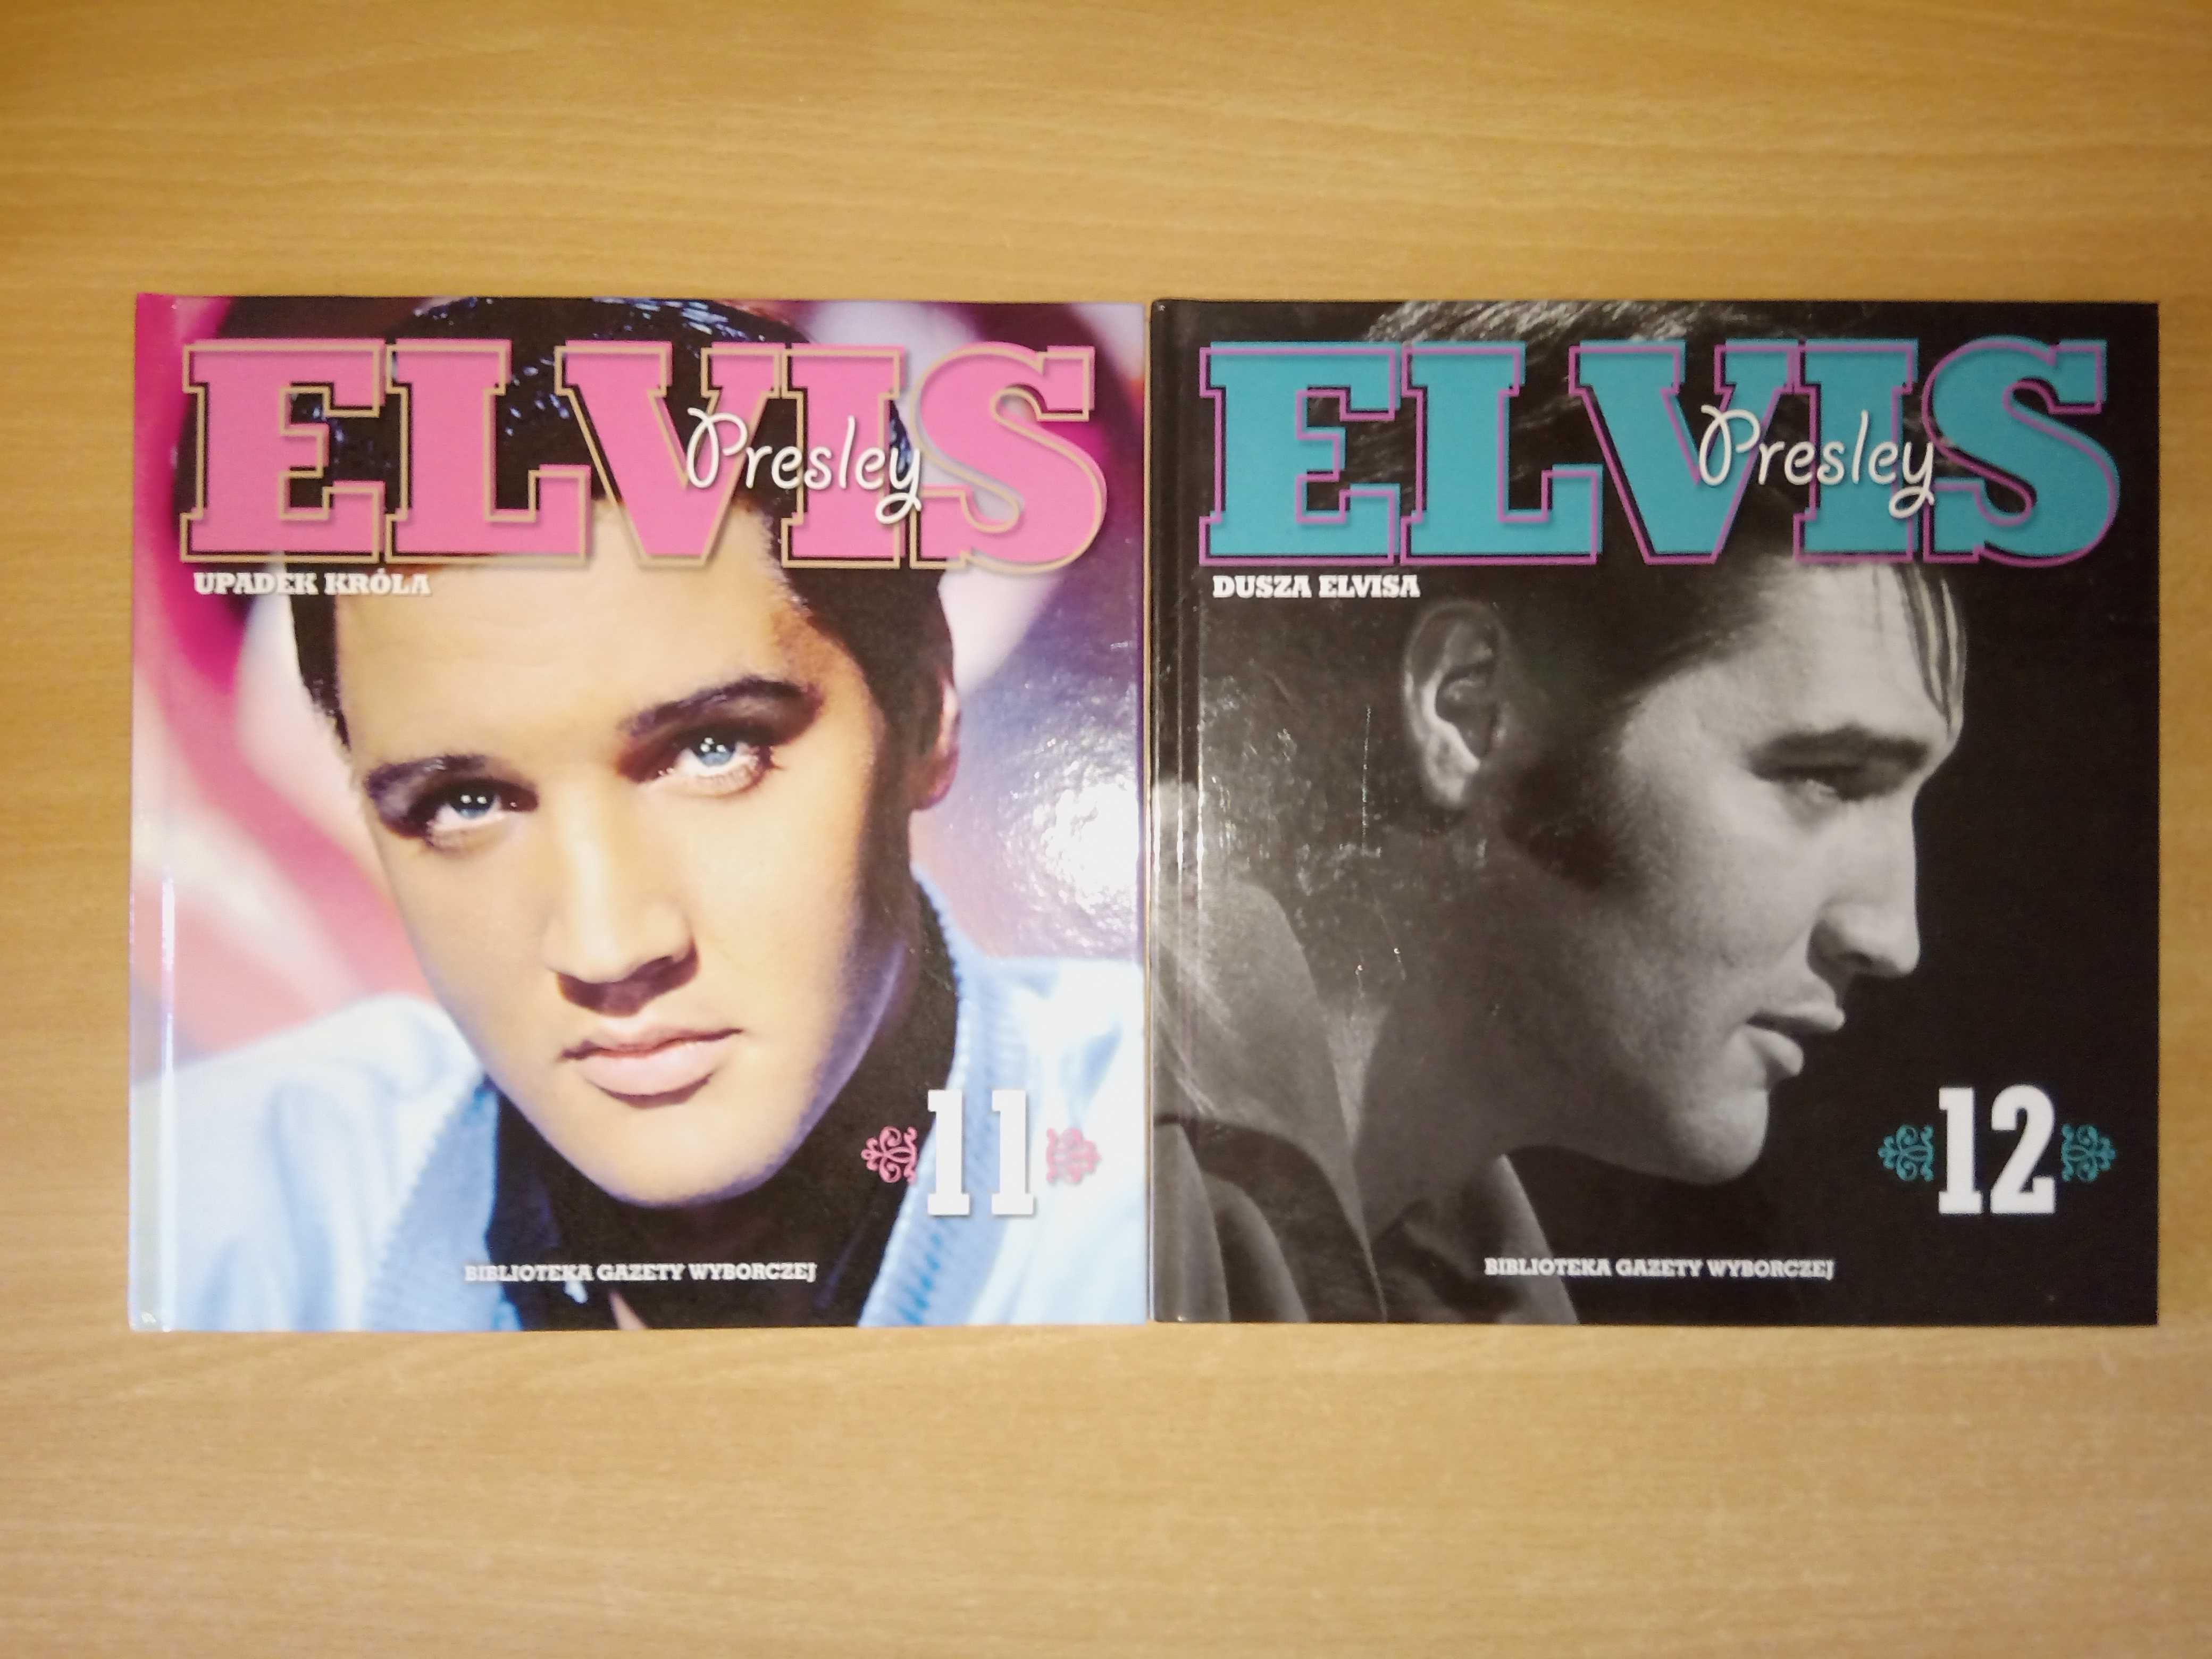 Elvis Presley Kultowa Kolekcja Piosenek 2009 [niepełna kolekcja]